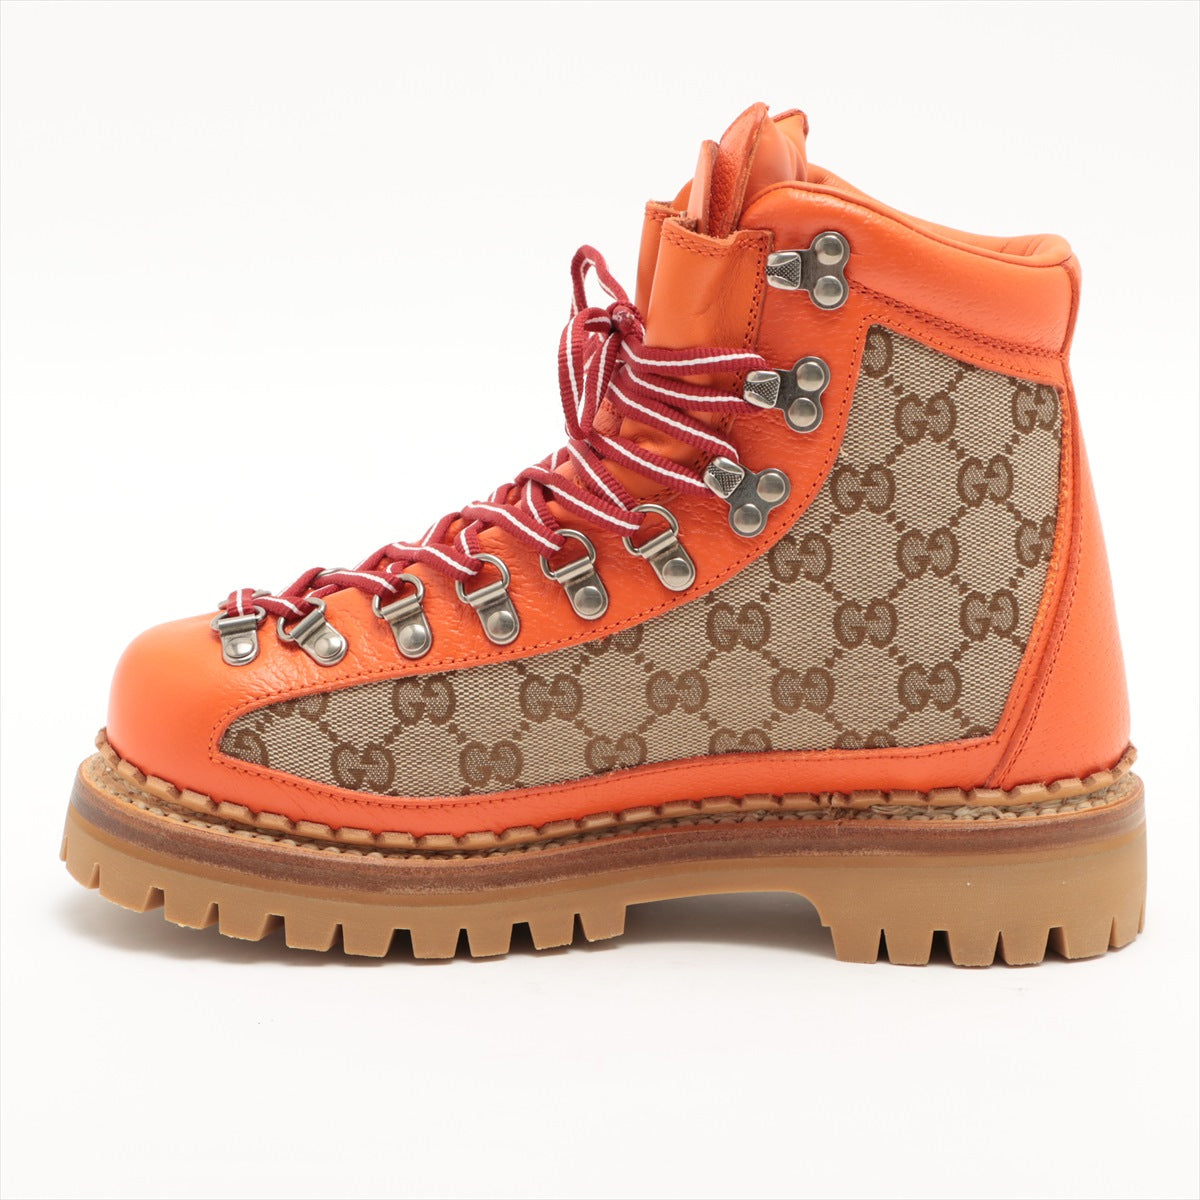 Gucci x North Face Canvas & Leather Boots 36 1/2 Ladies' Beige x orange 679927